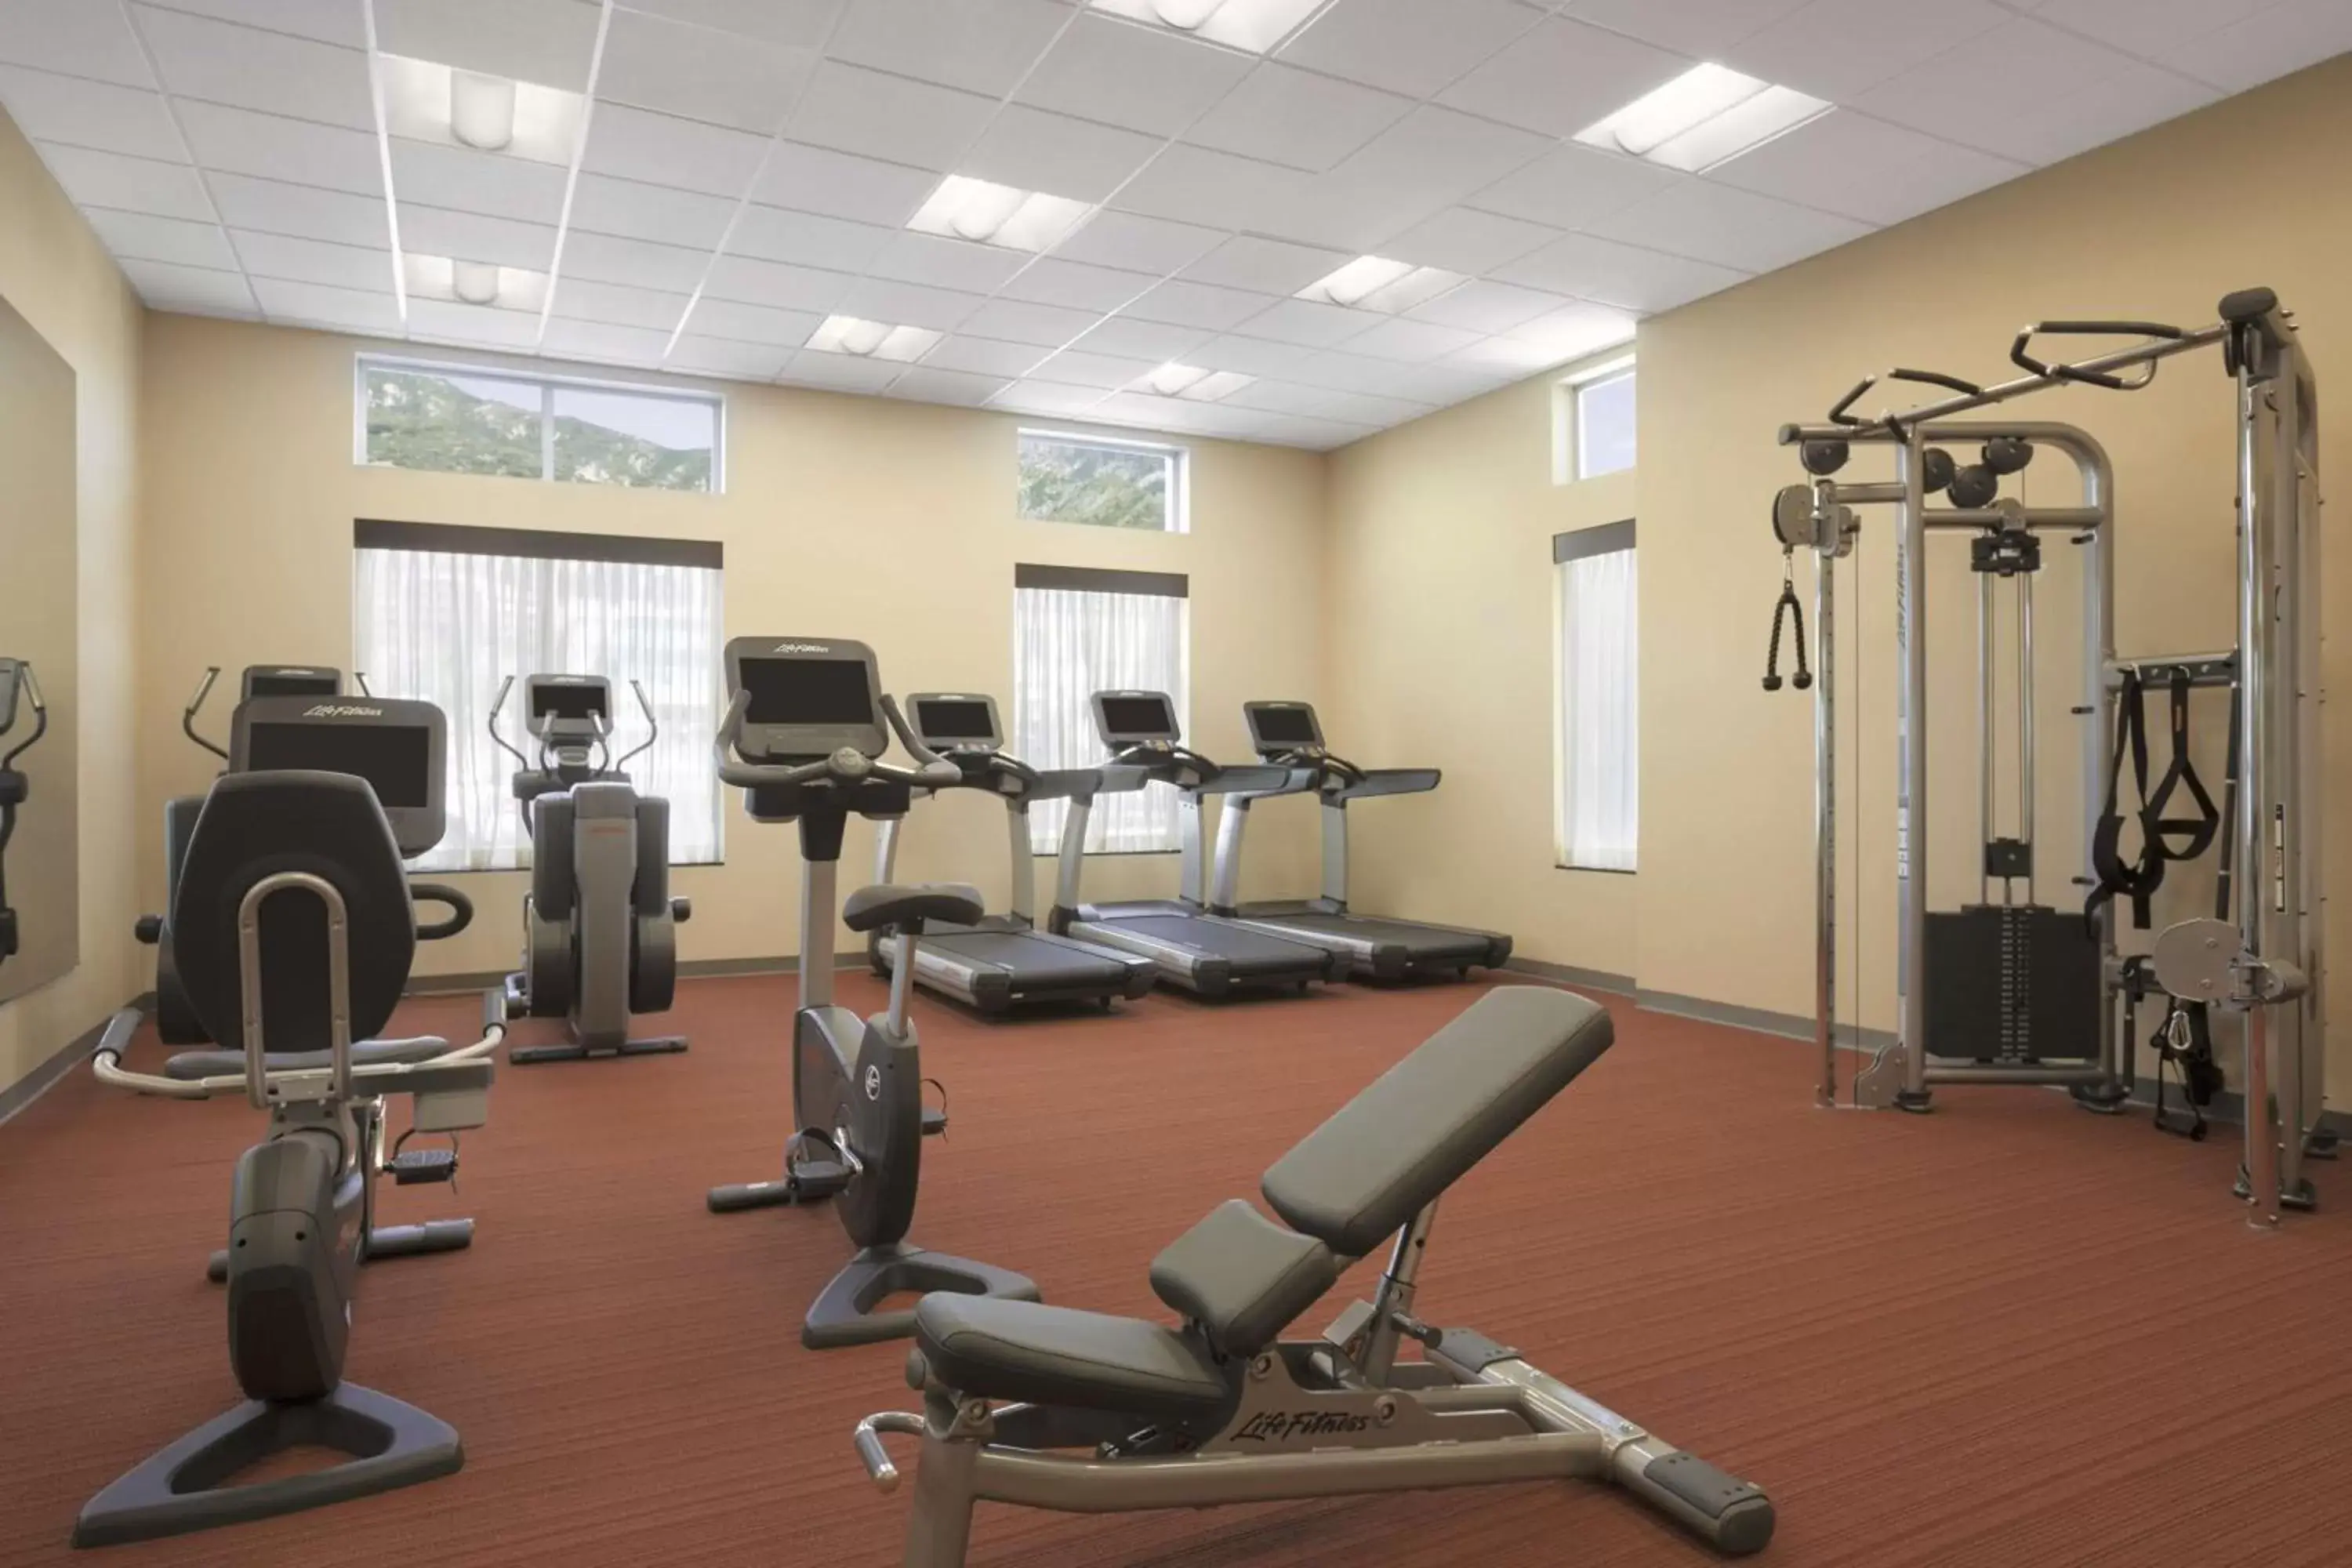 Fitness centre/facilities, Fitness Center/Facilities in Hyatt Place Salt Lake City/Cottonwood